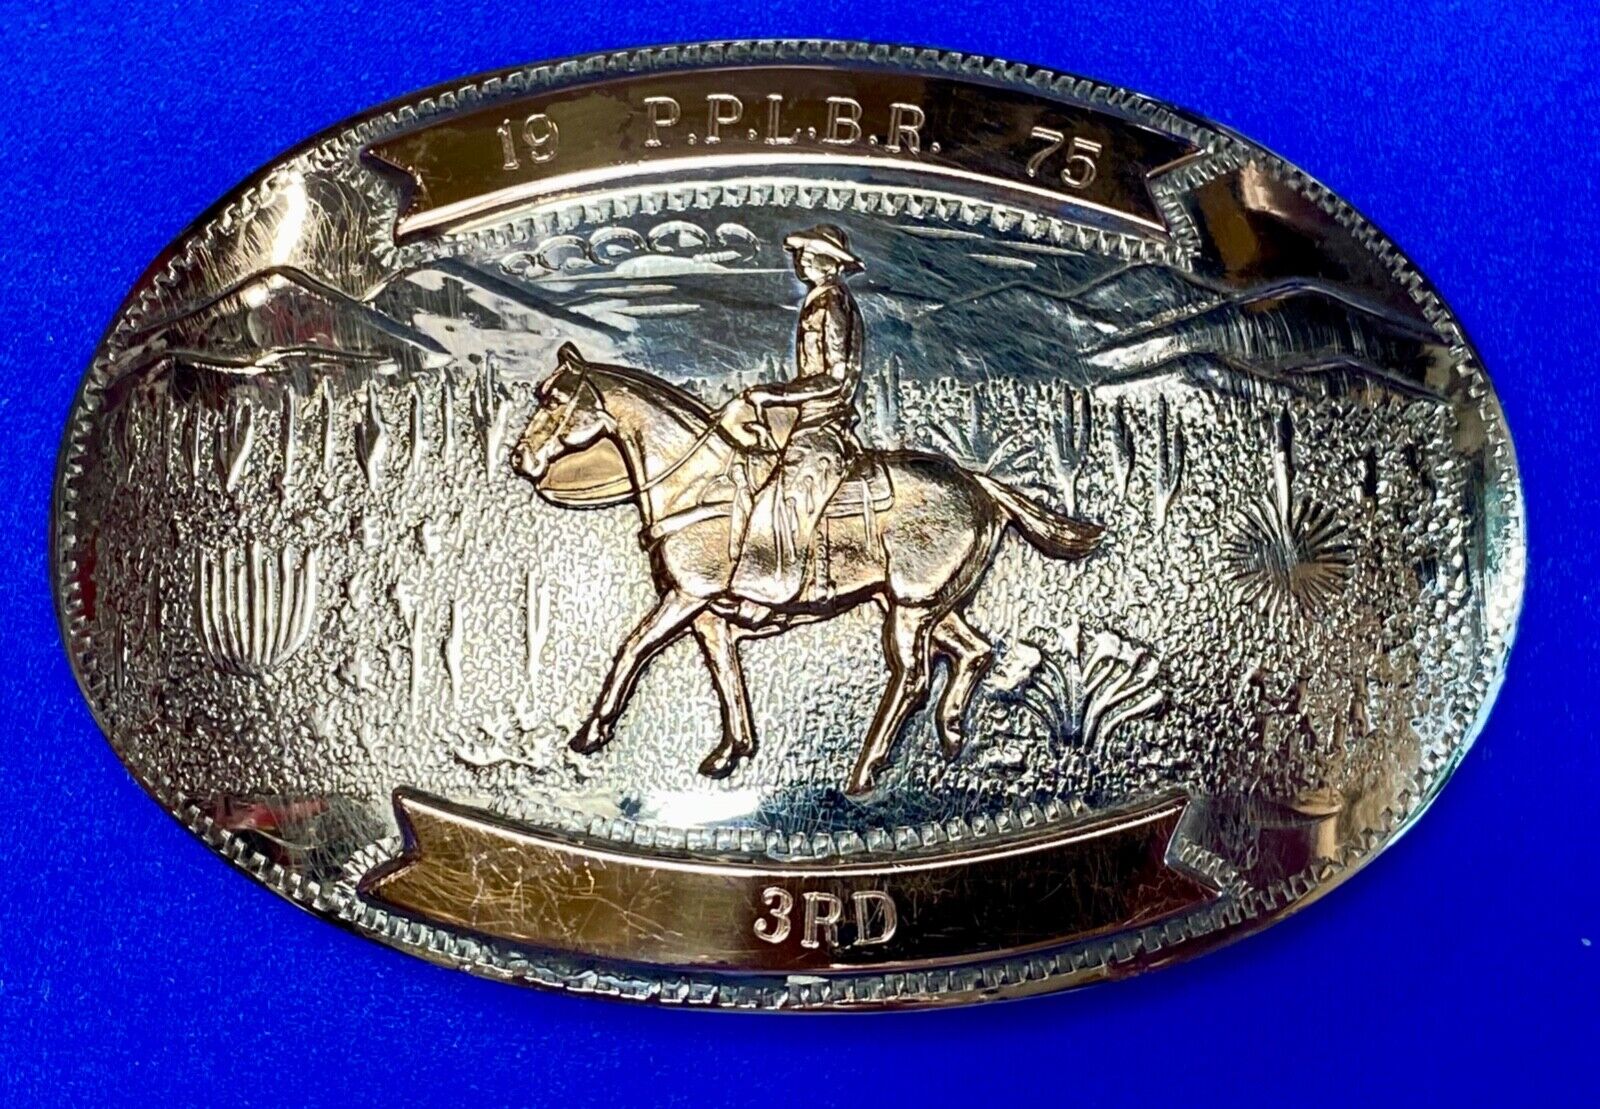 PPLBR 1975 Rodeo Trophy German Silver belt buckle - Comstock Silversmiths